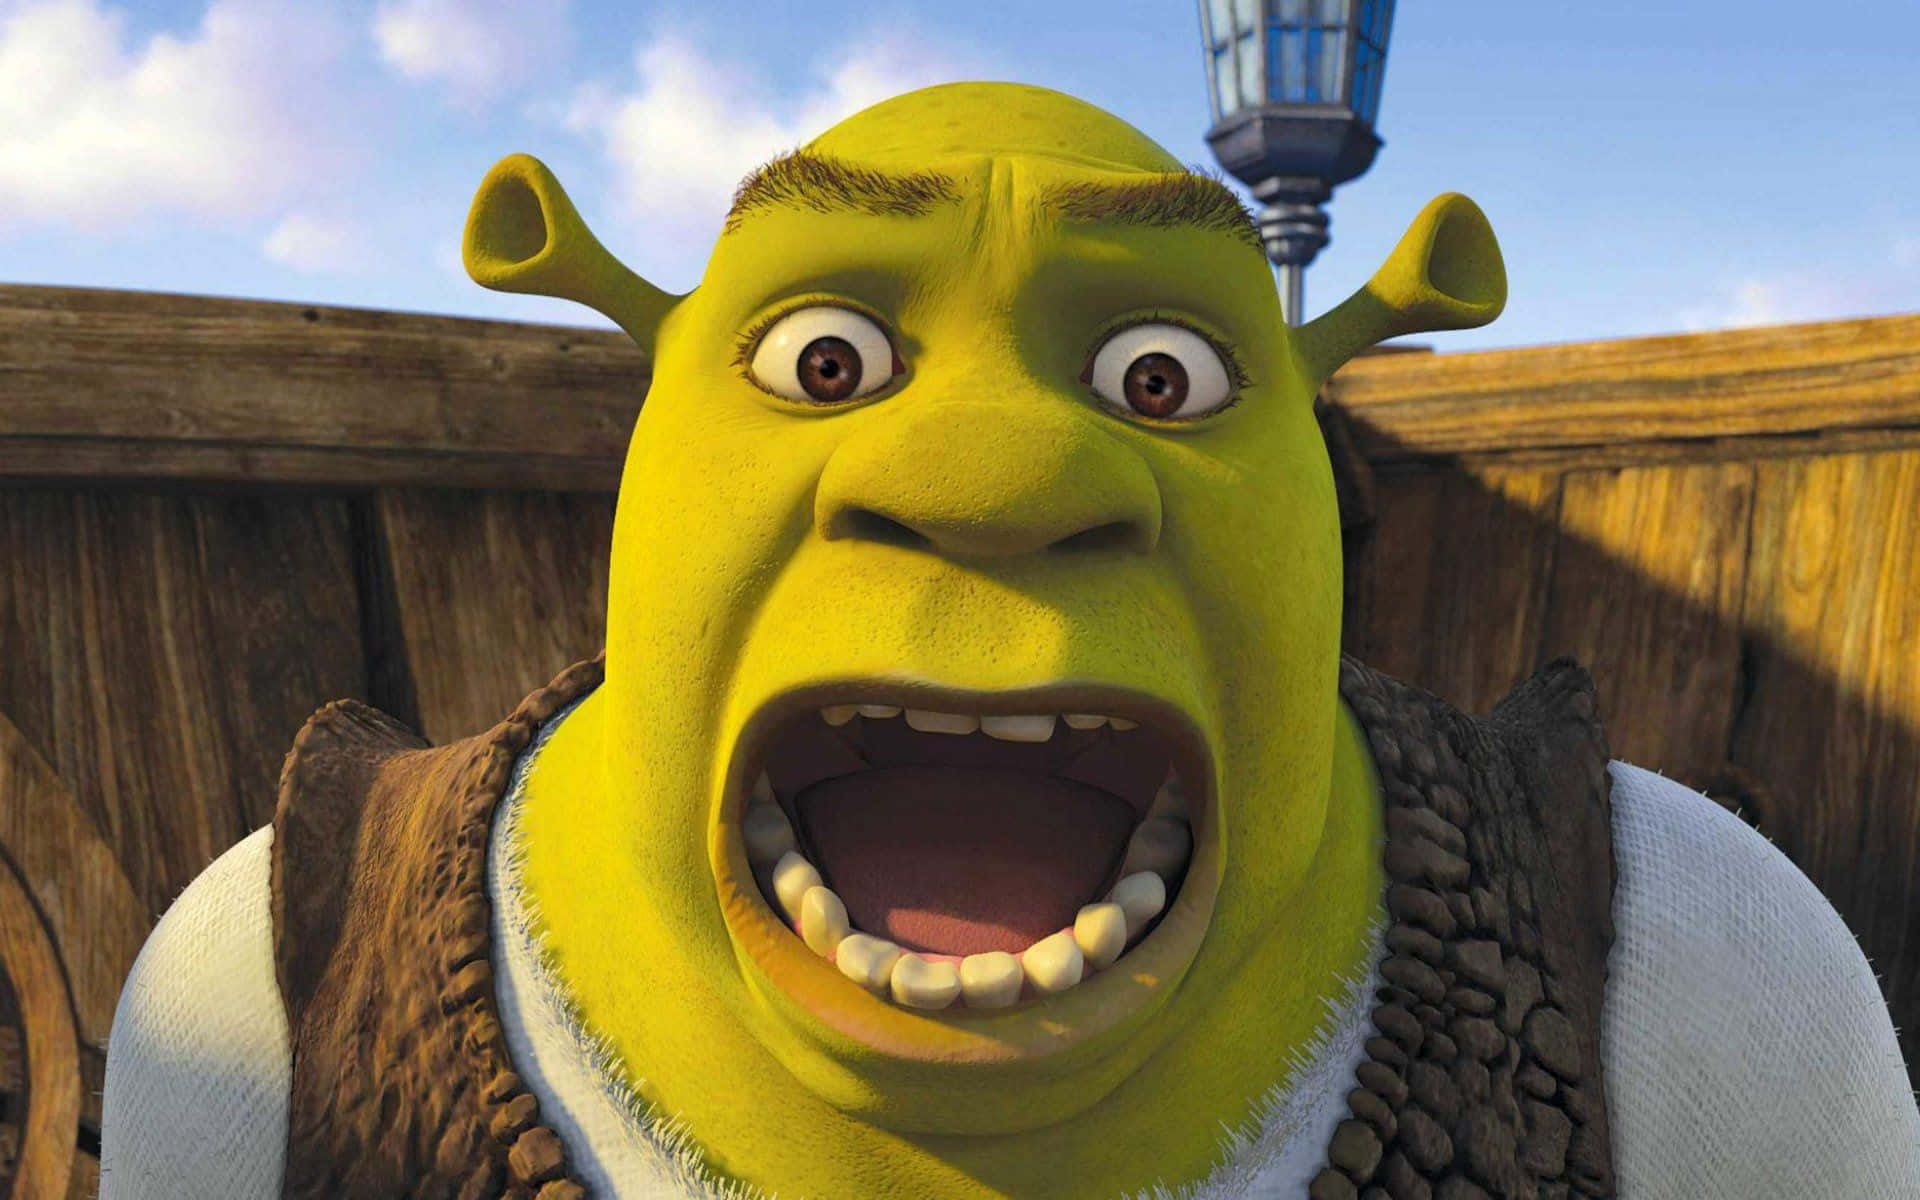 Shrek has a Laugh!